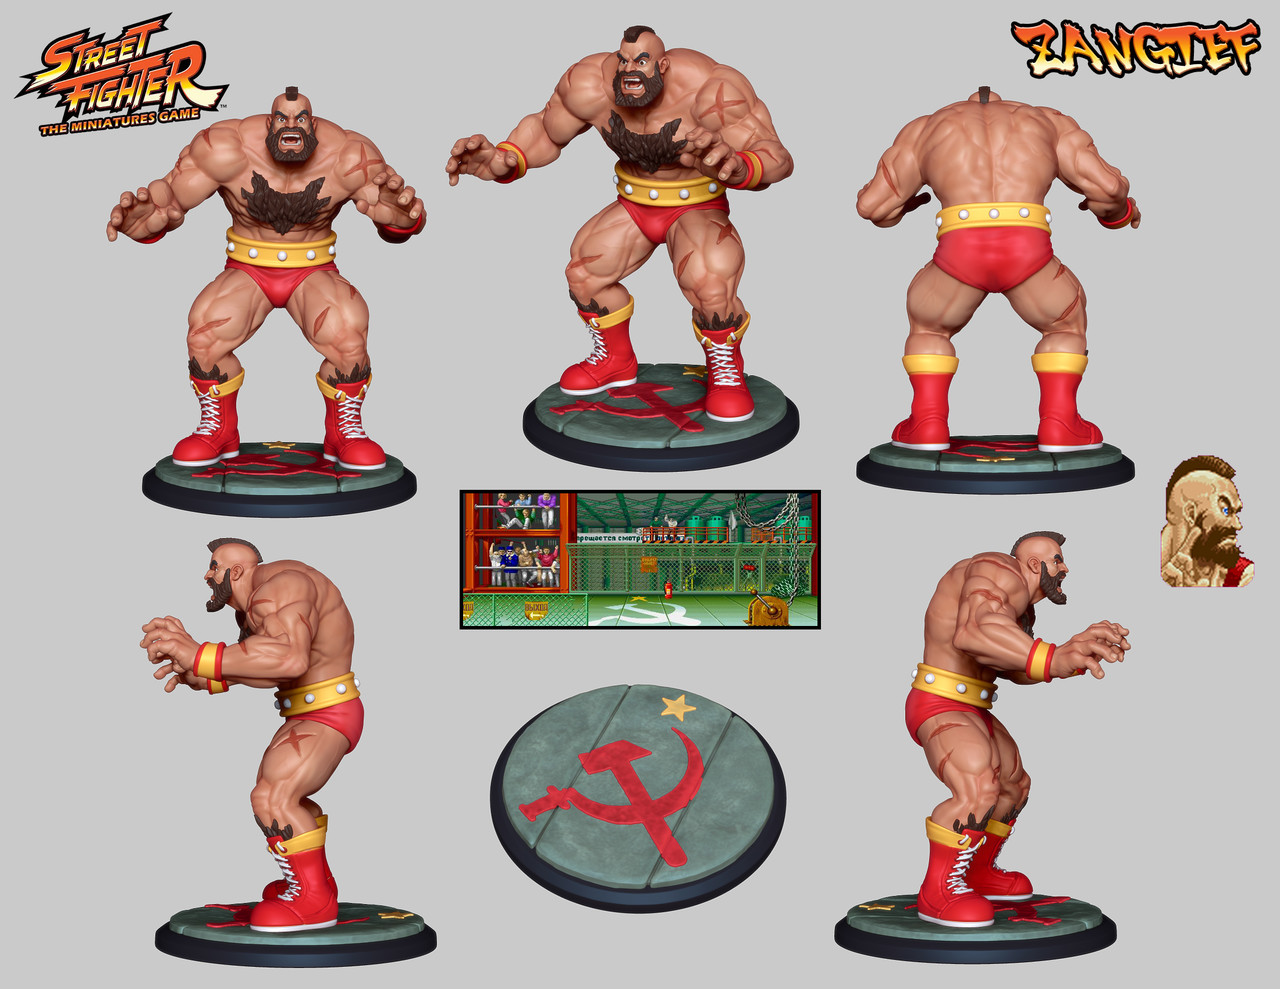 Zangief - Street Fighter Fan Art - ZBrushCentral